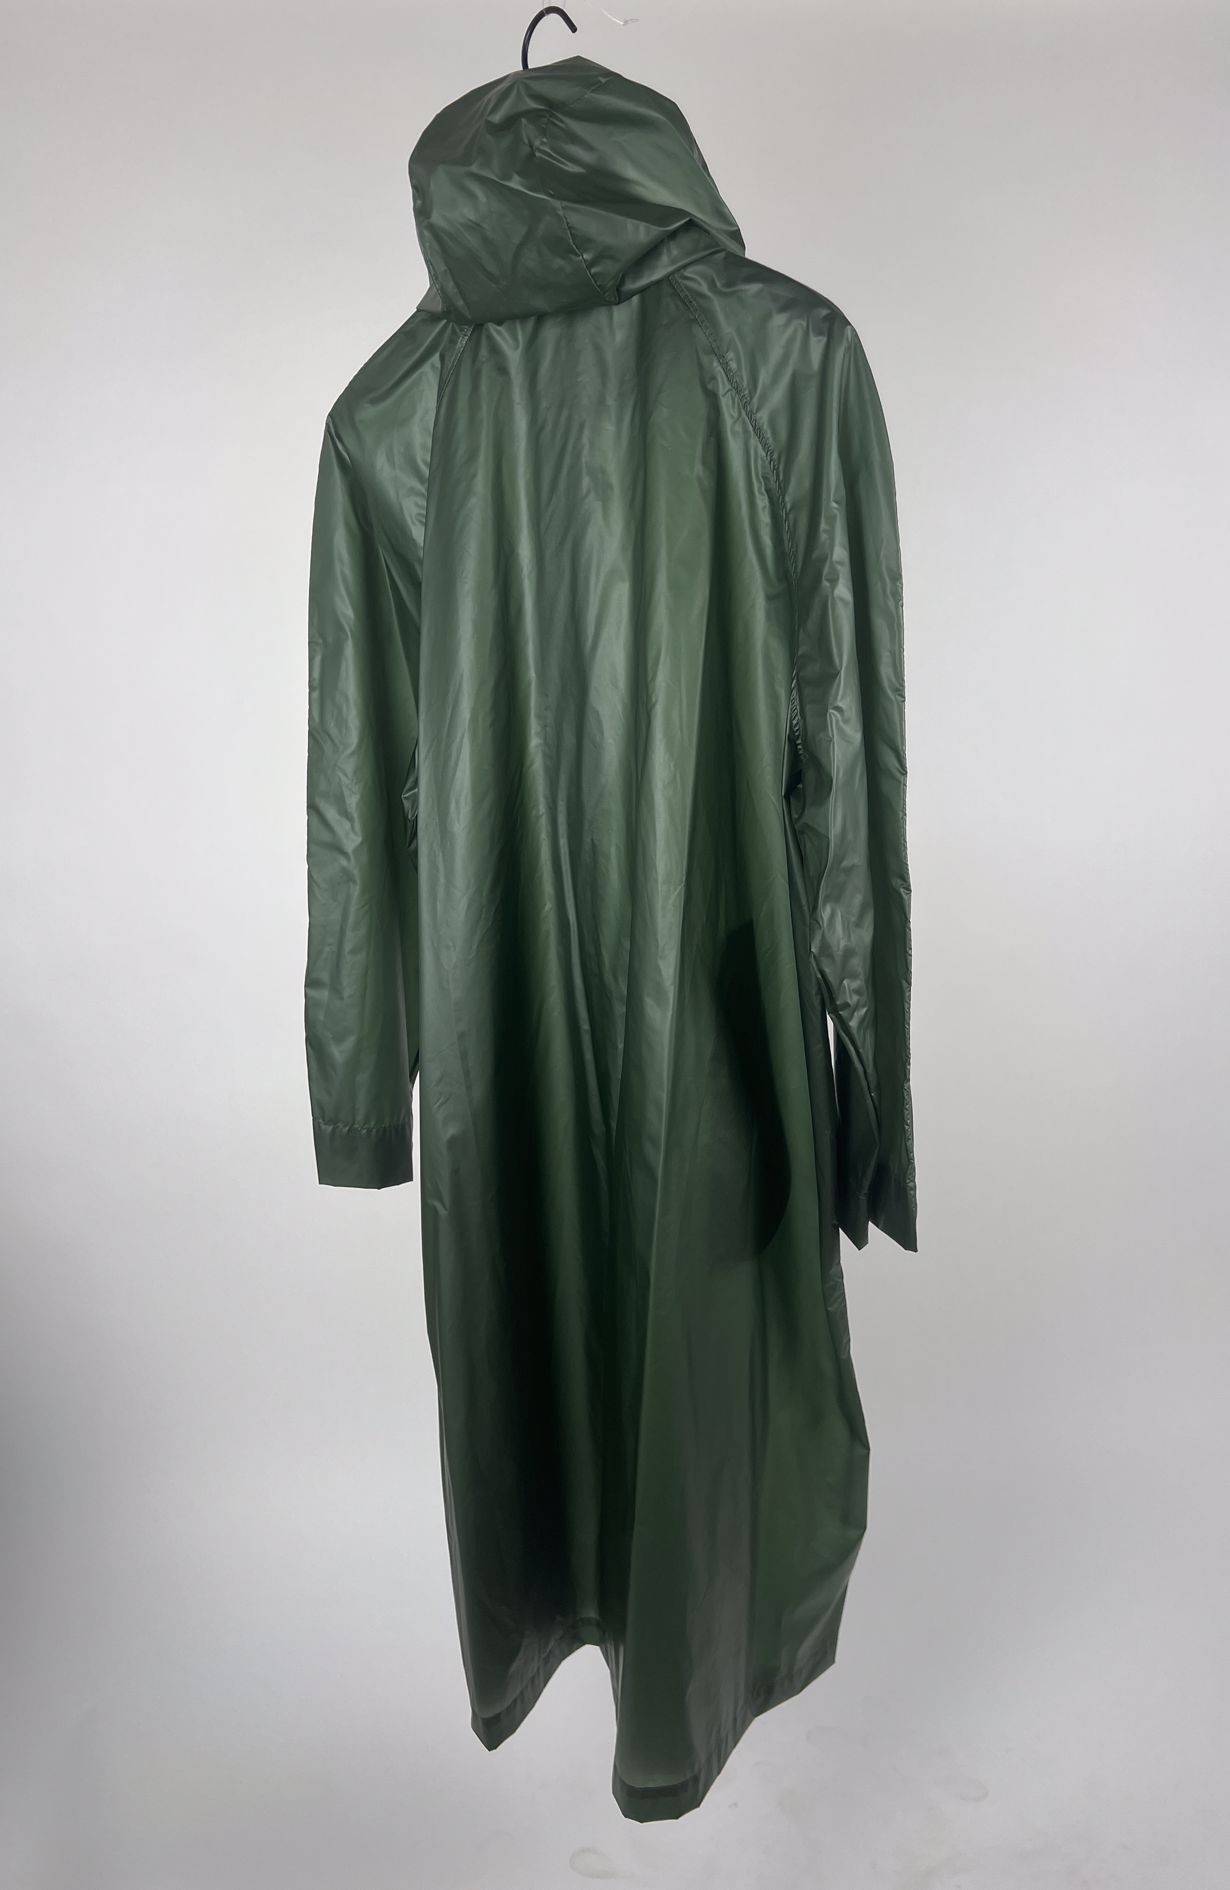 Wardrobe NYC Raincoat Green Size M